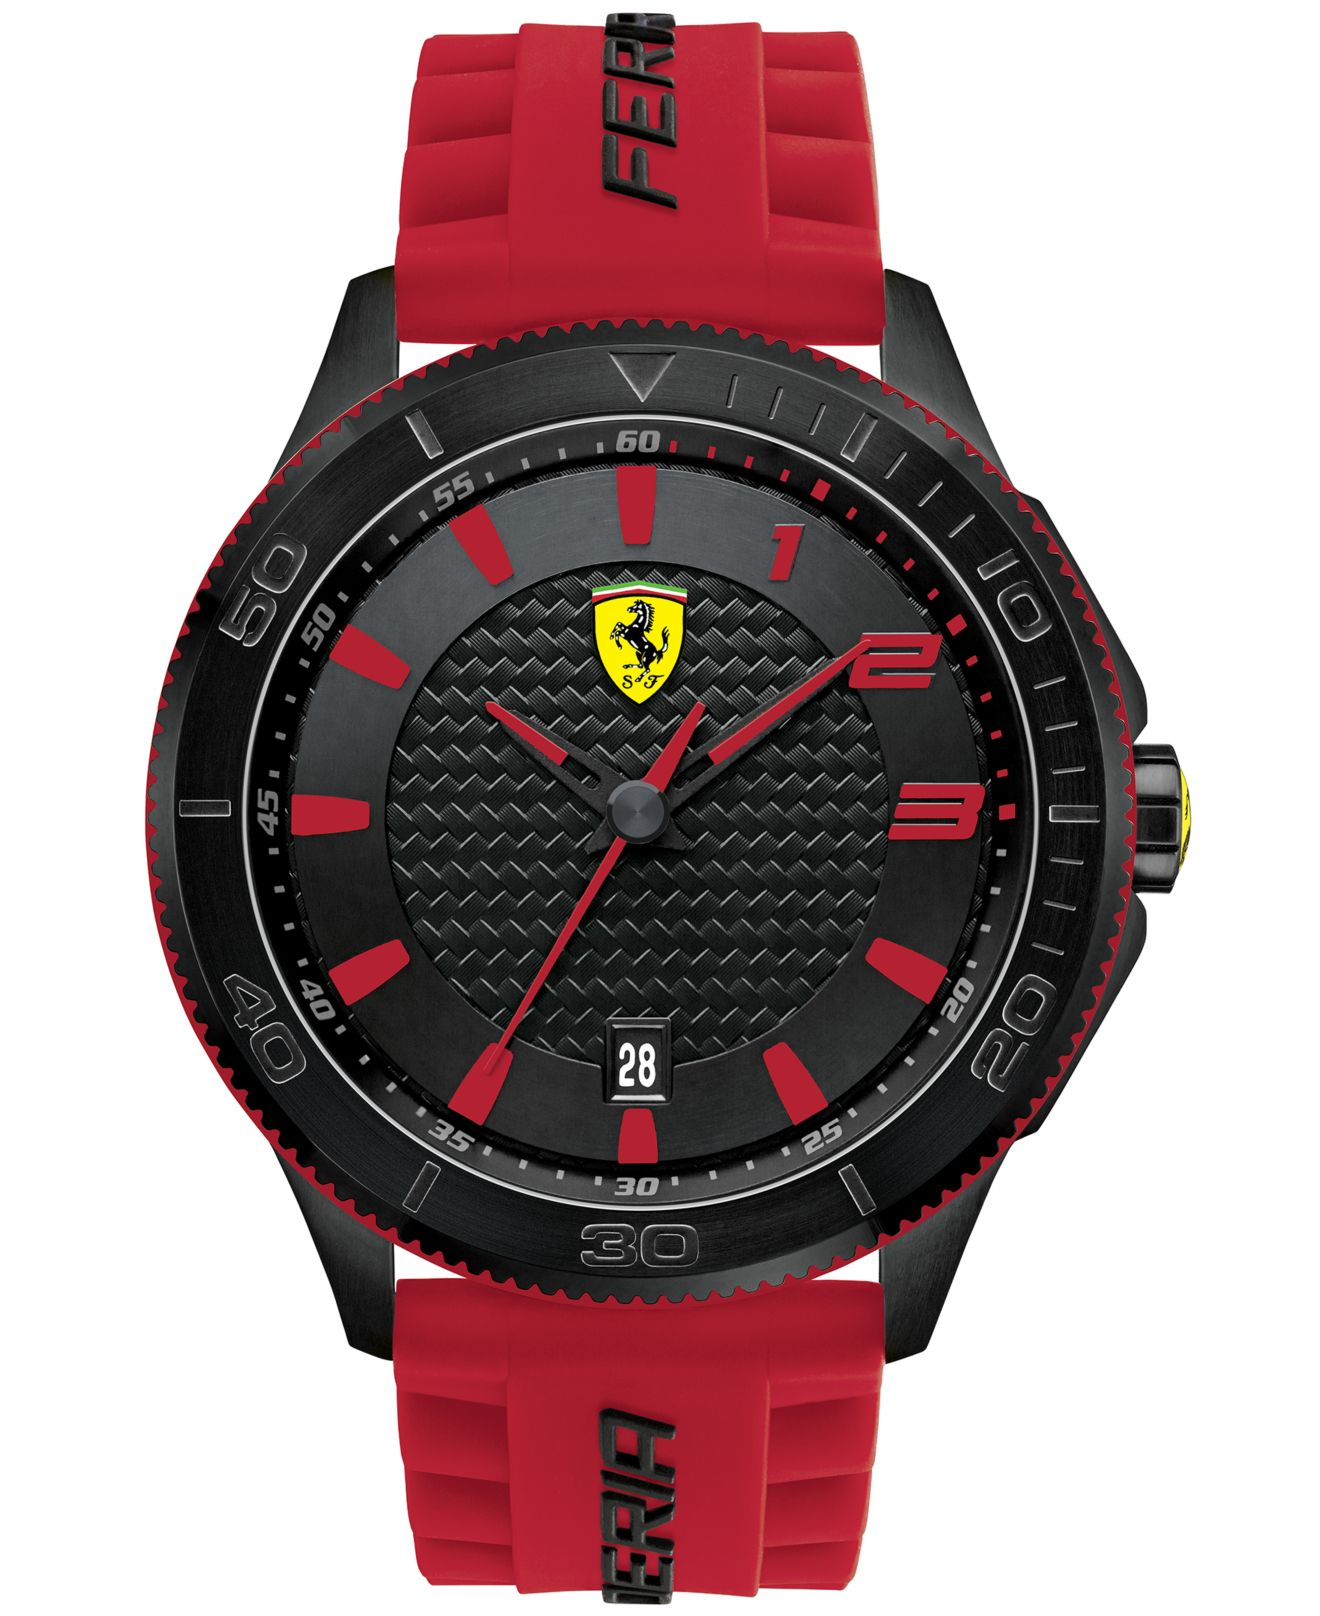 Часы 48 рф. Часы Феррари Скудерия. Scuderia Ferrari часы мужские. Часы Скудерия Феррари мужские. Наручные часы Ferrari 830157.